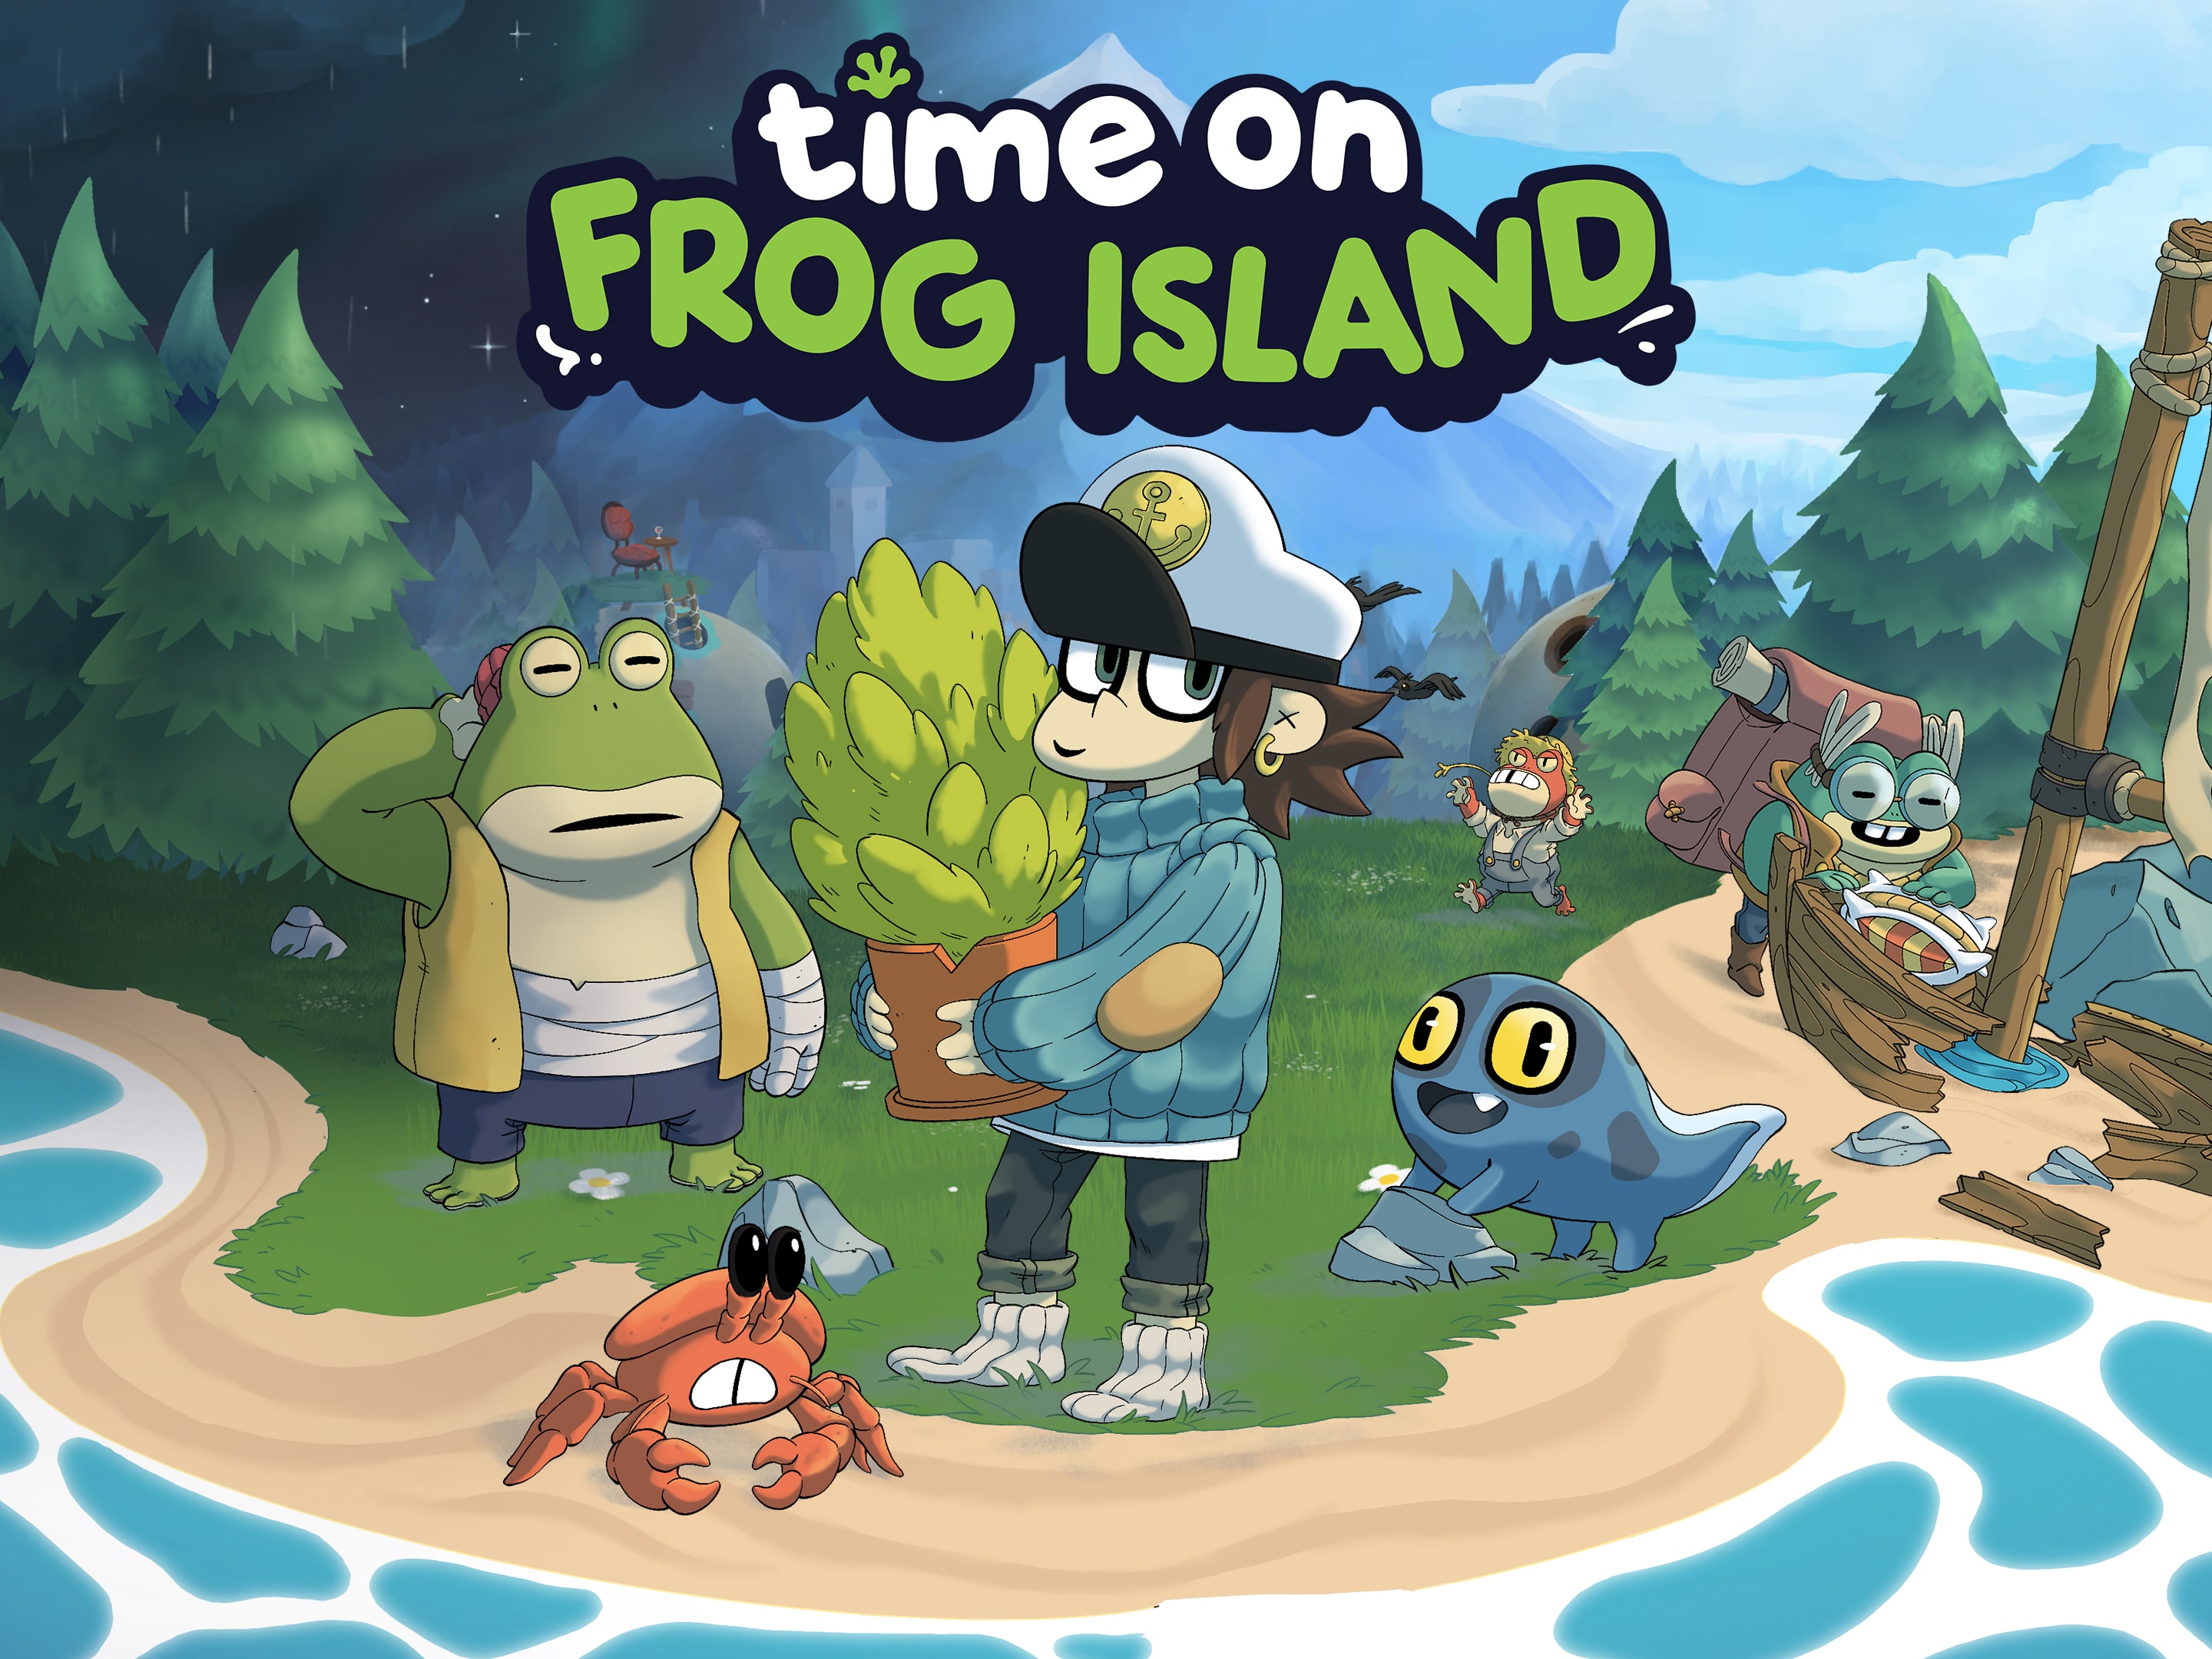 Frog Island on Time